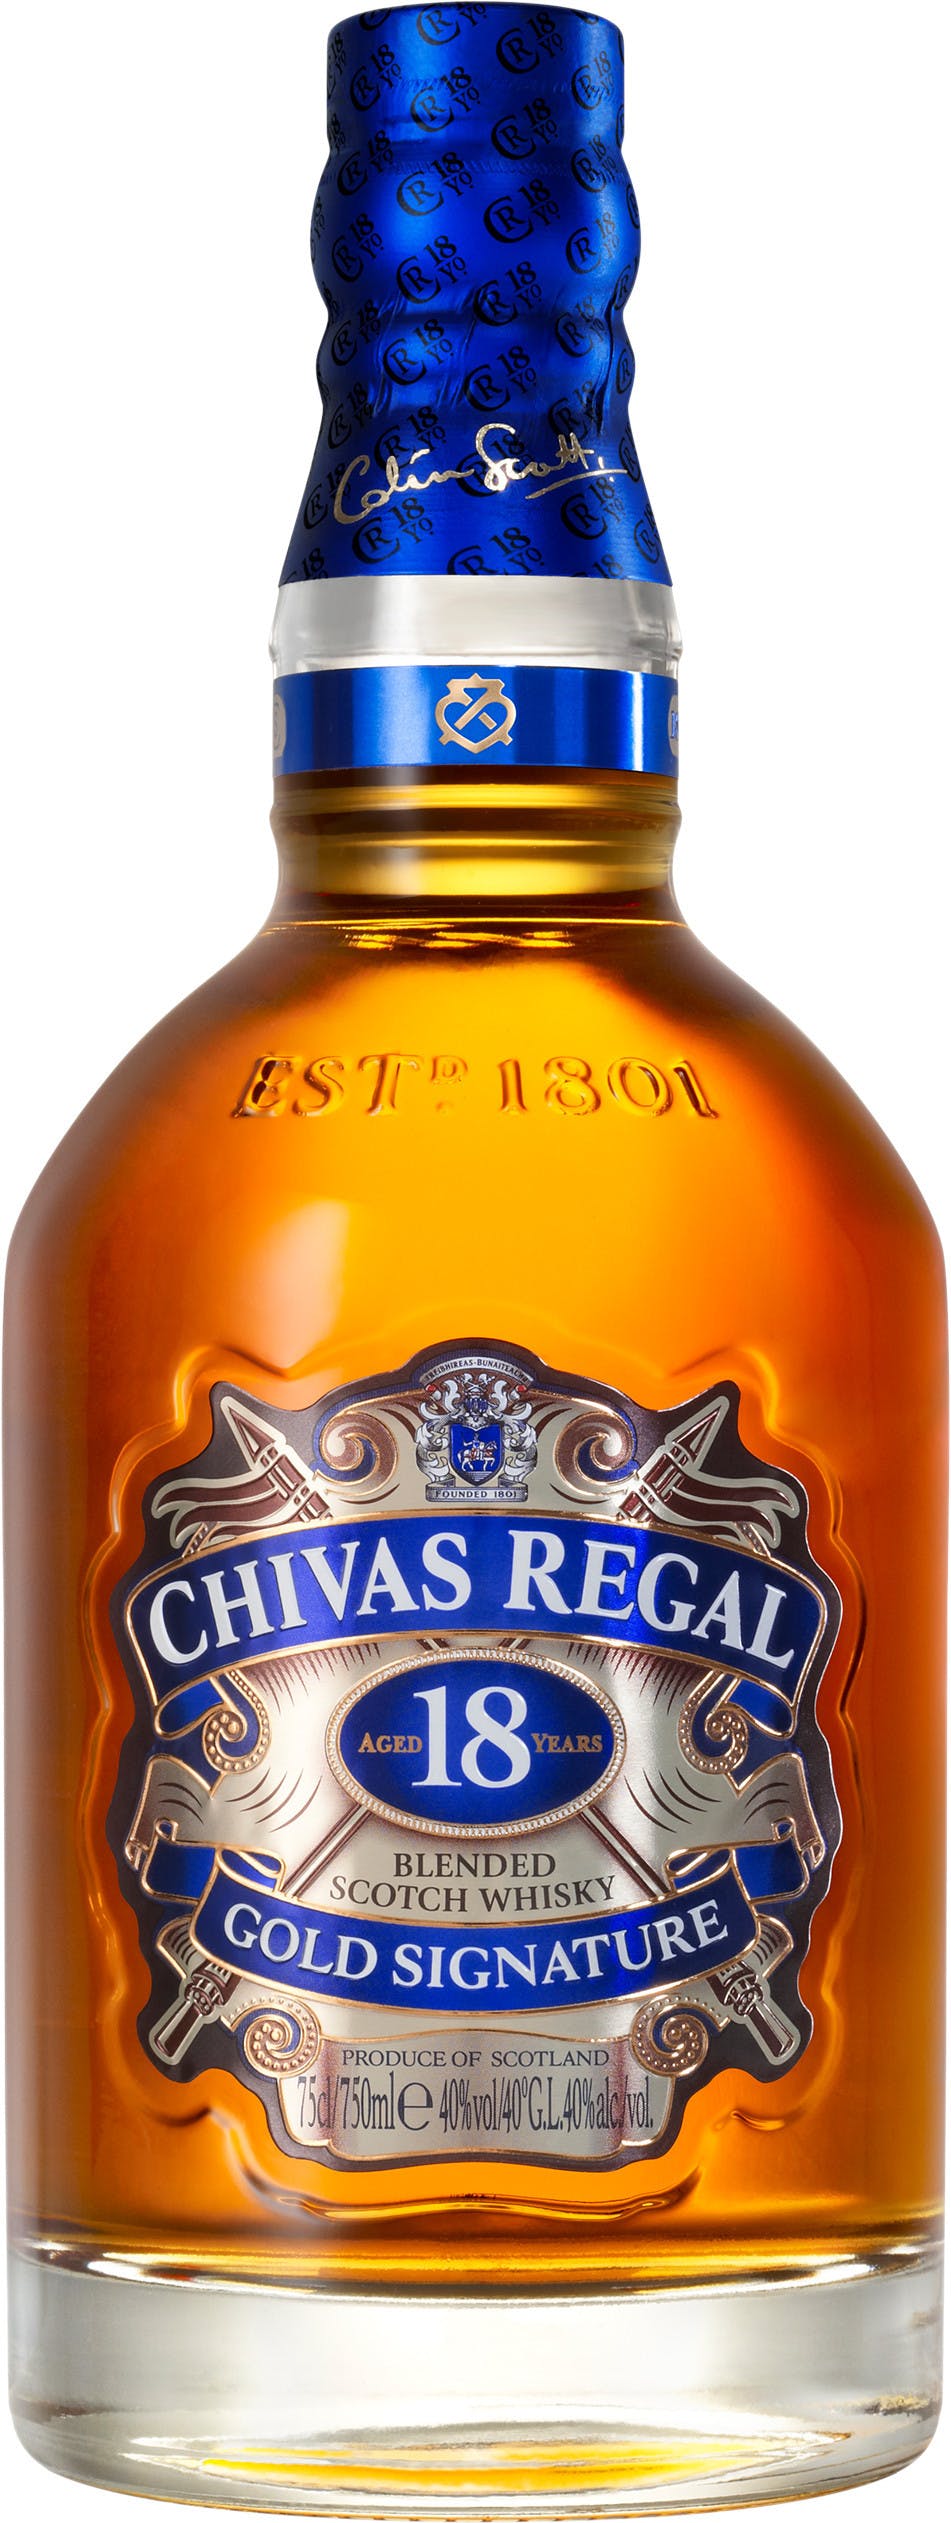 Gold signature. Виски шотландский Чивас Ригал 18. Chivas Regal 18 Blended Scotch. Чивас 18 Blended Scotch Whisky. Виски шотландский купажированный Чивас Ригал.